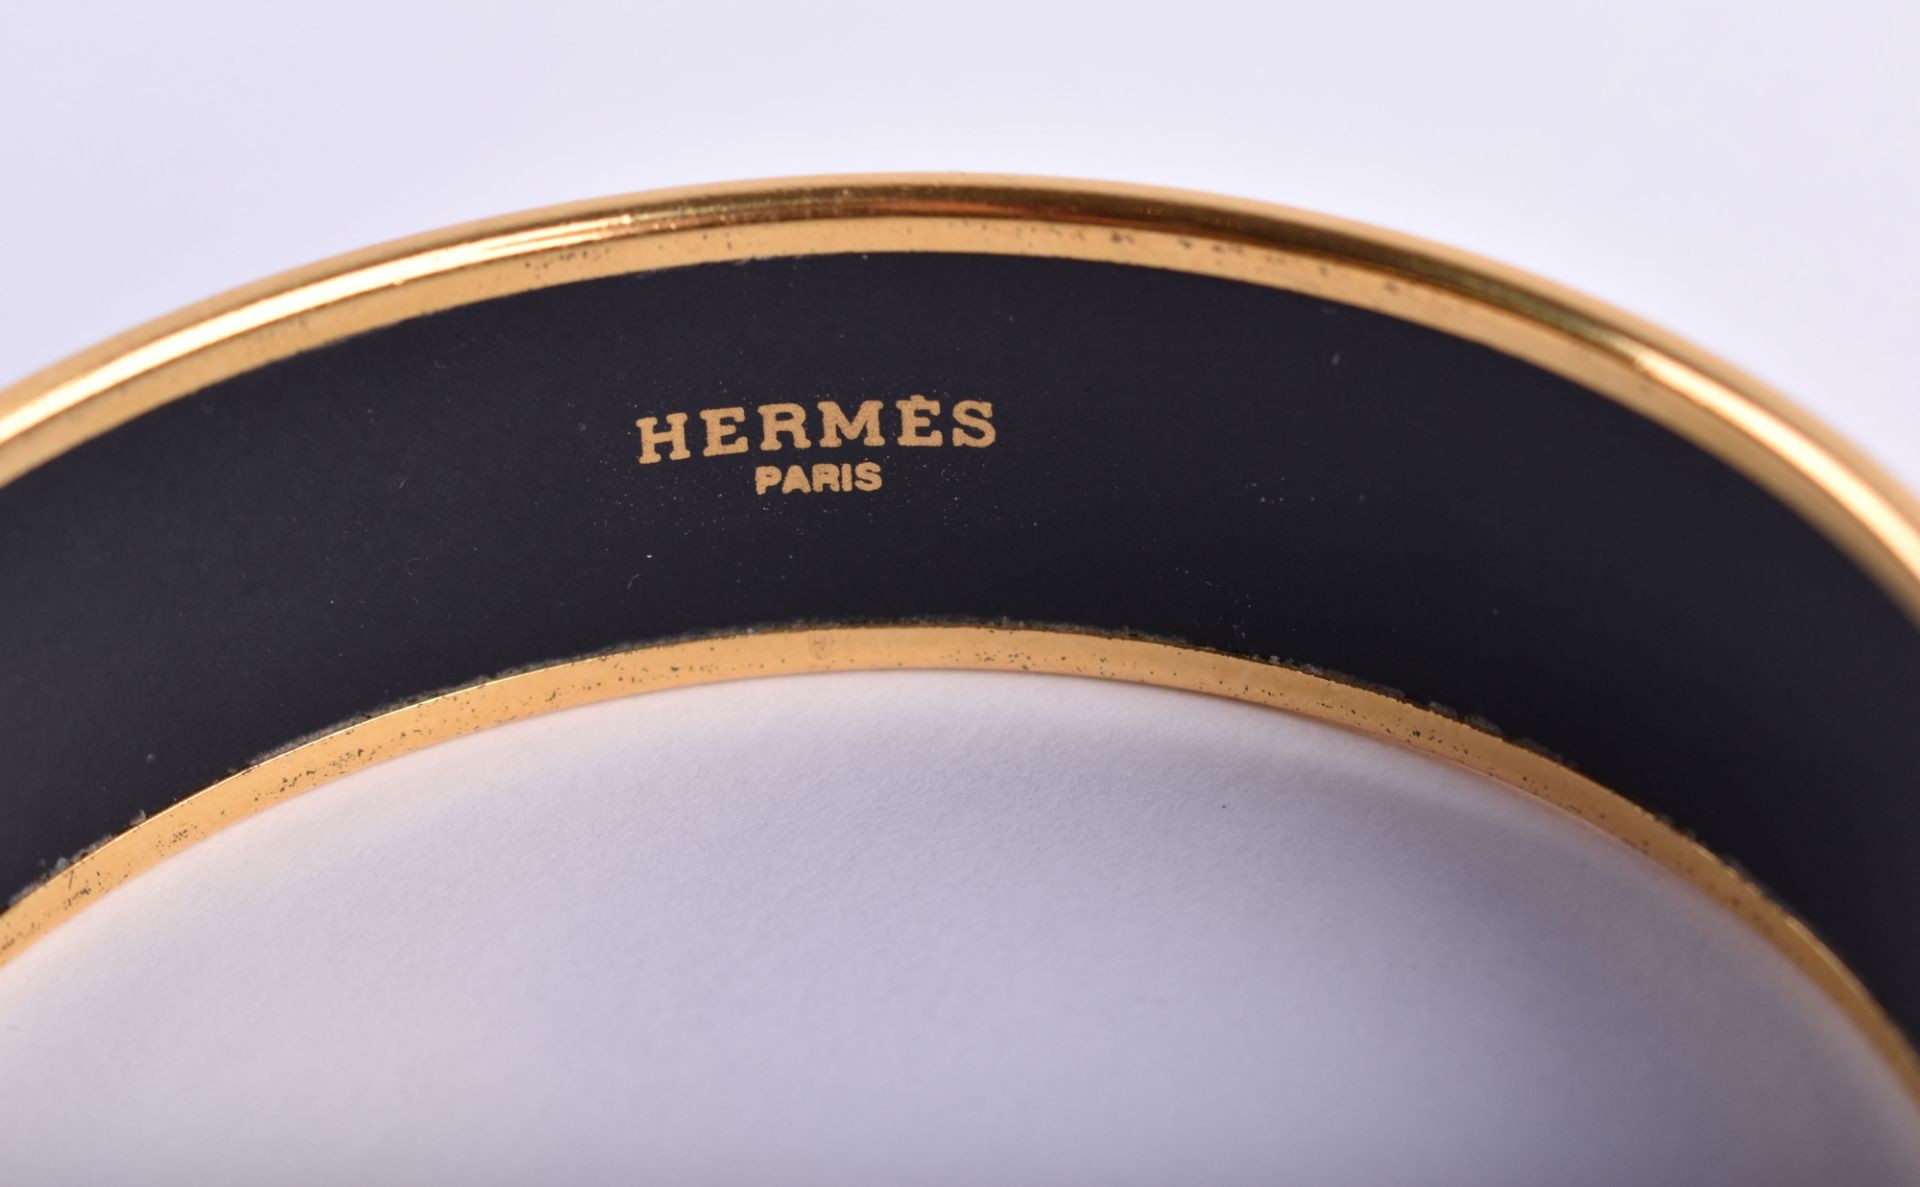  Vintage enamel bangle Hermes Paris - Image 4 of 6